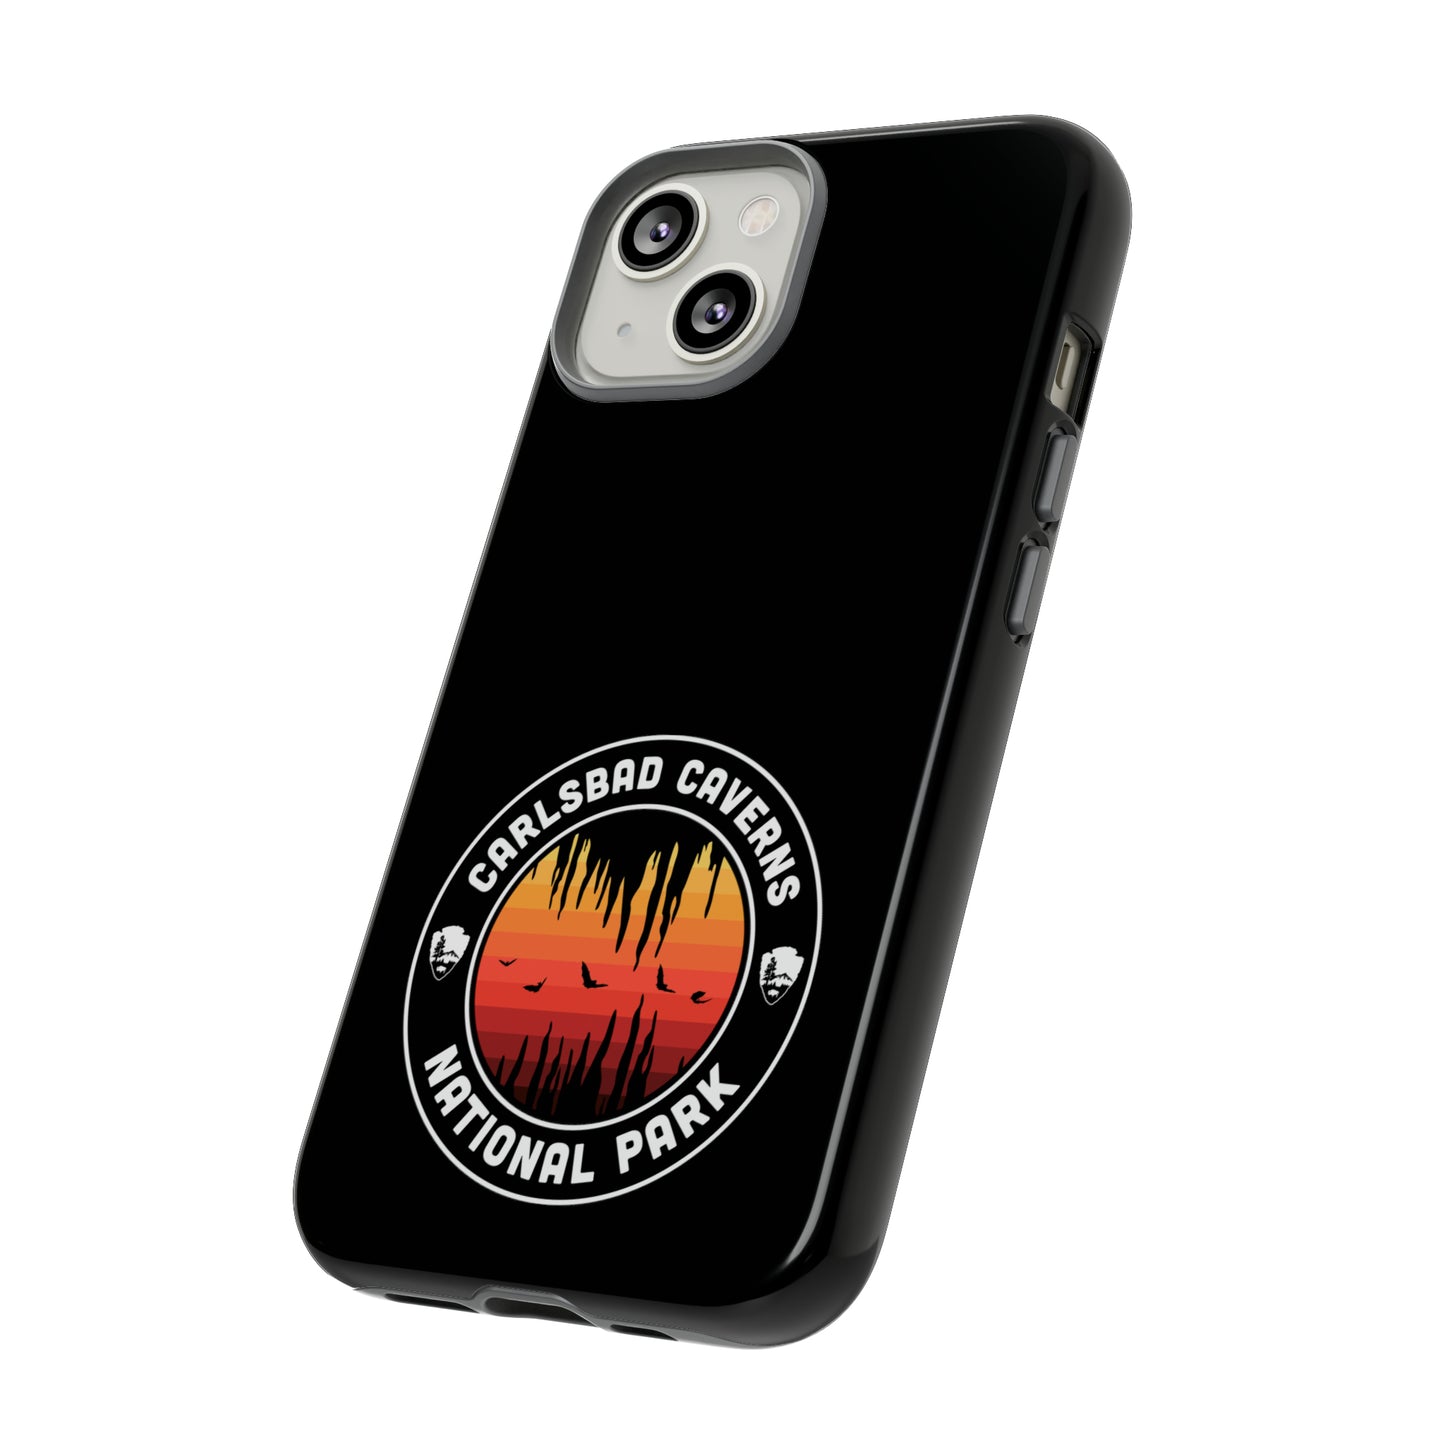 Carlsbad Caverns National Park Phone Case - Orange Round Emblem Design